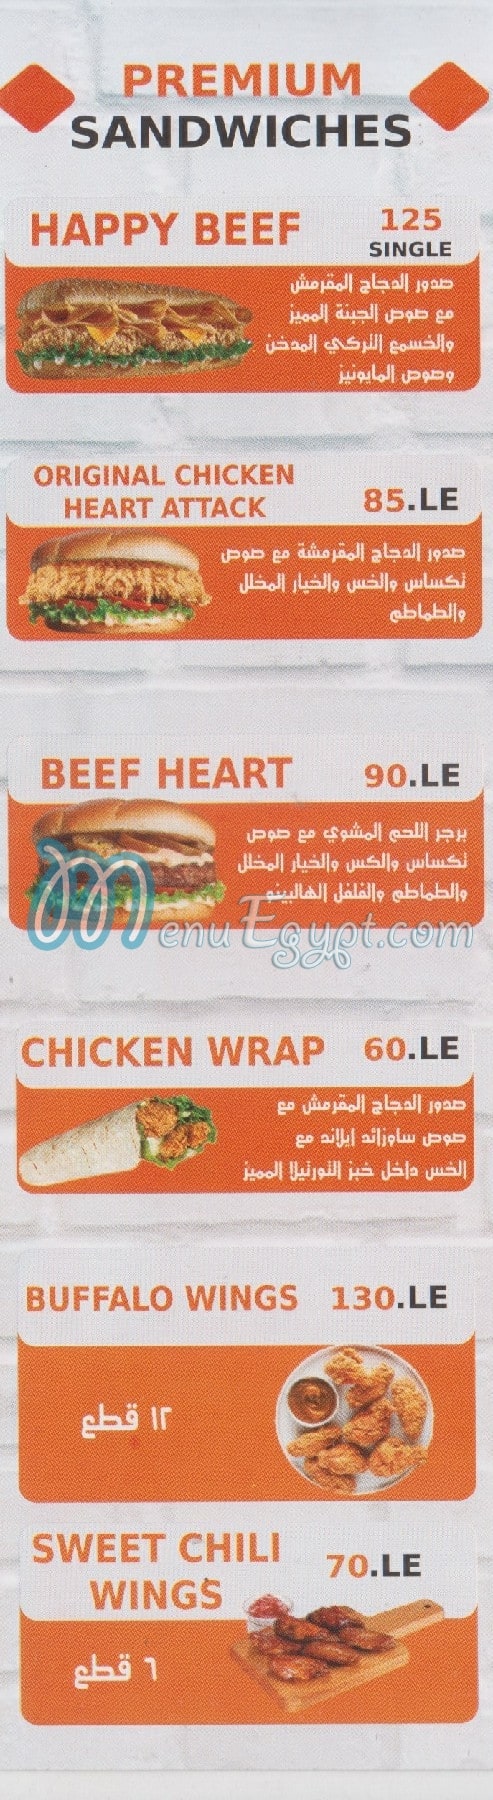 Heart Attack Fried Chicken egypt